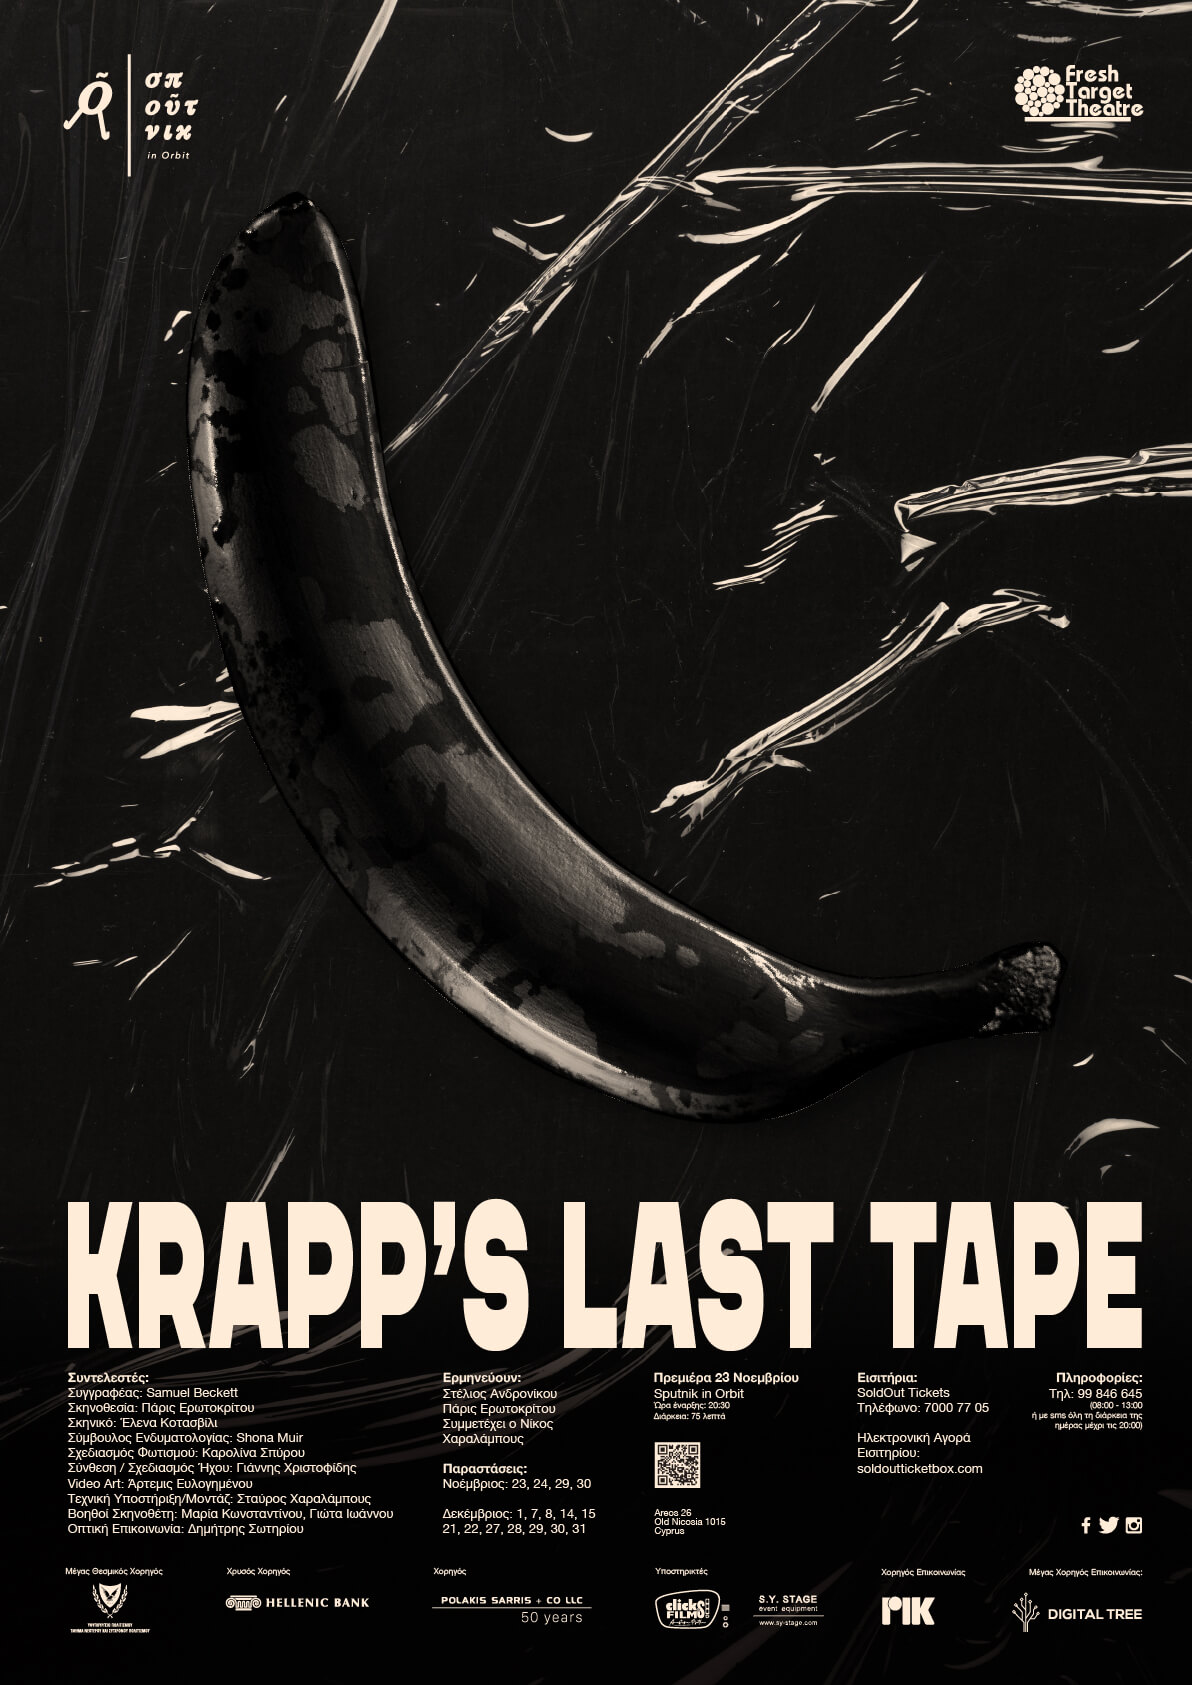 KRAPP'S LAST TAPE